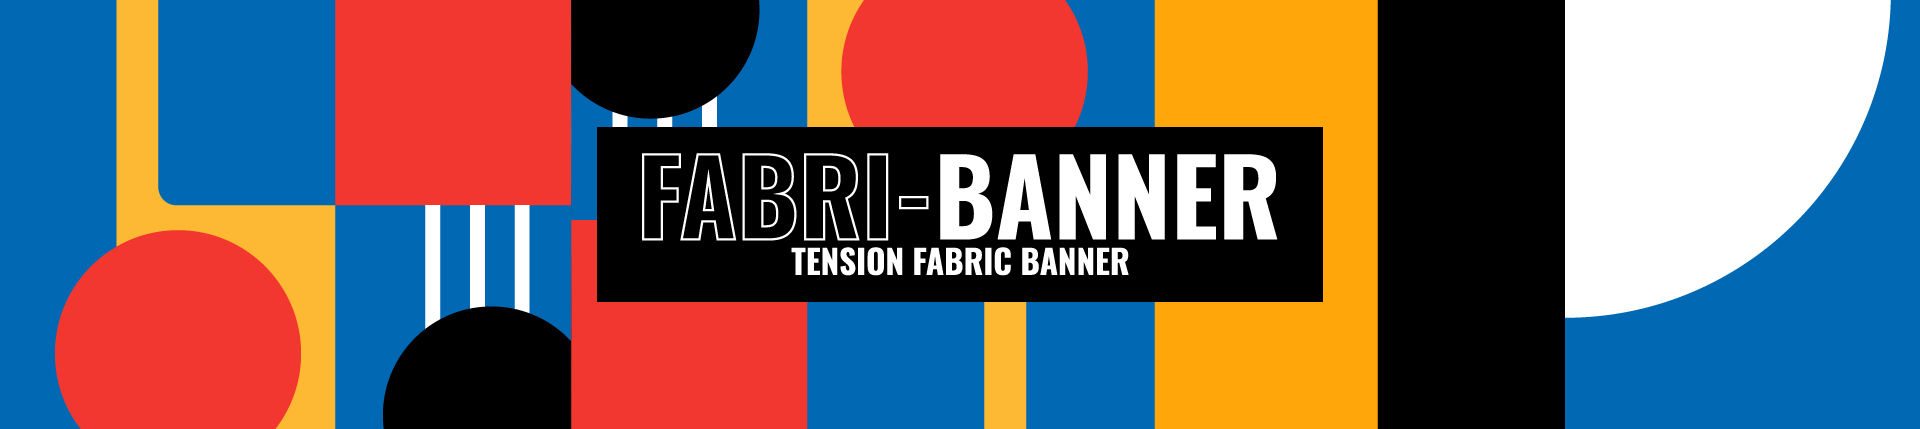 FABRI-BANNER Fabric Banner